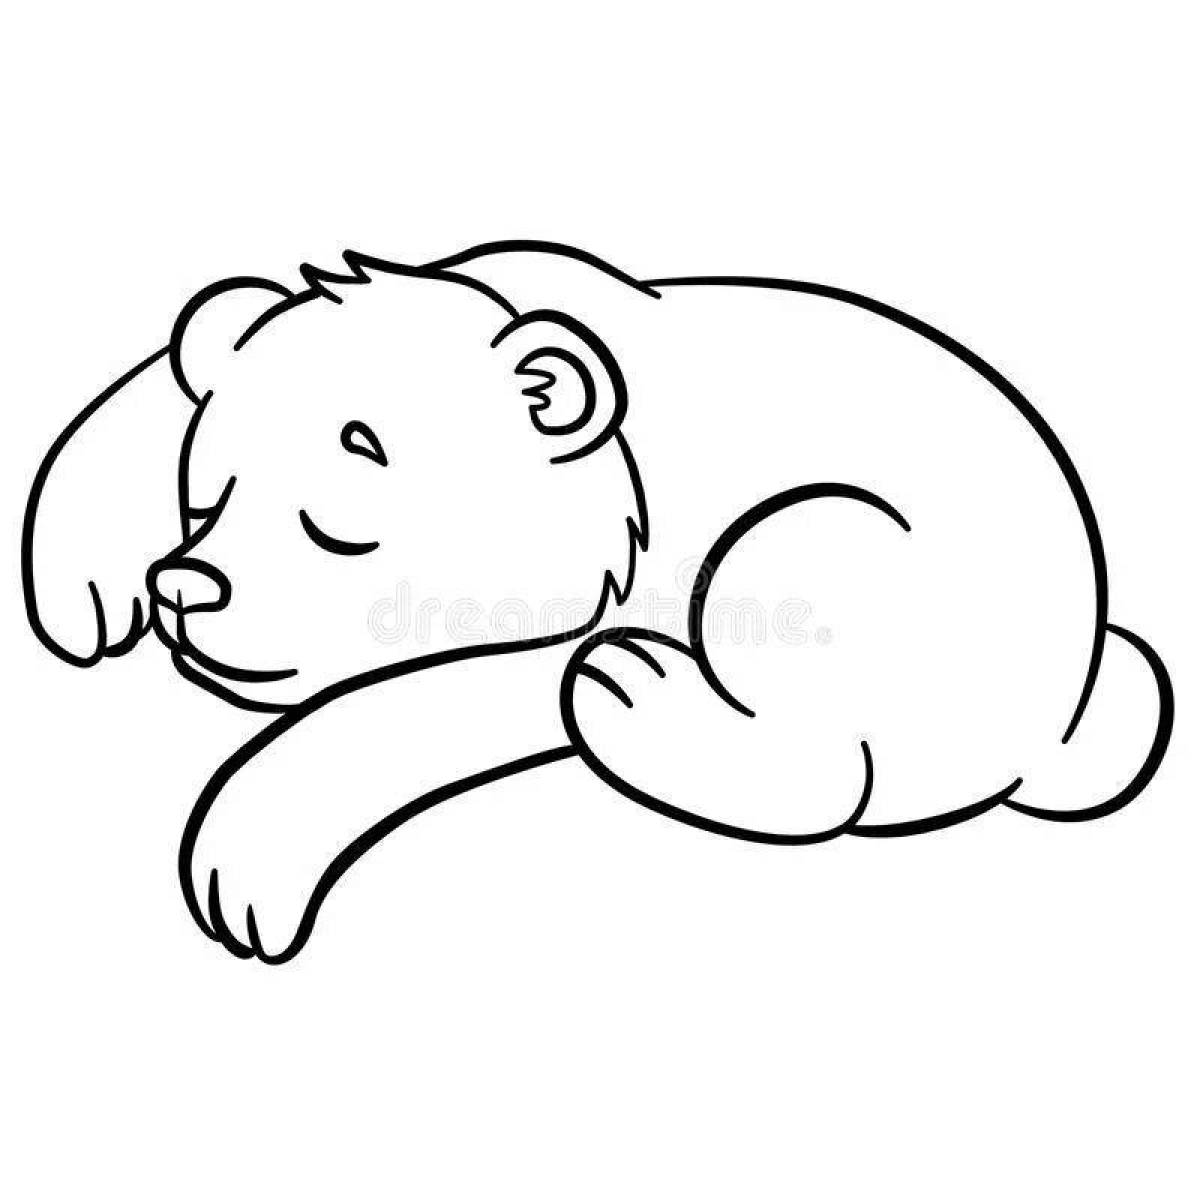 Dreamy sleeping bear coloring book